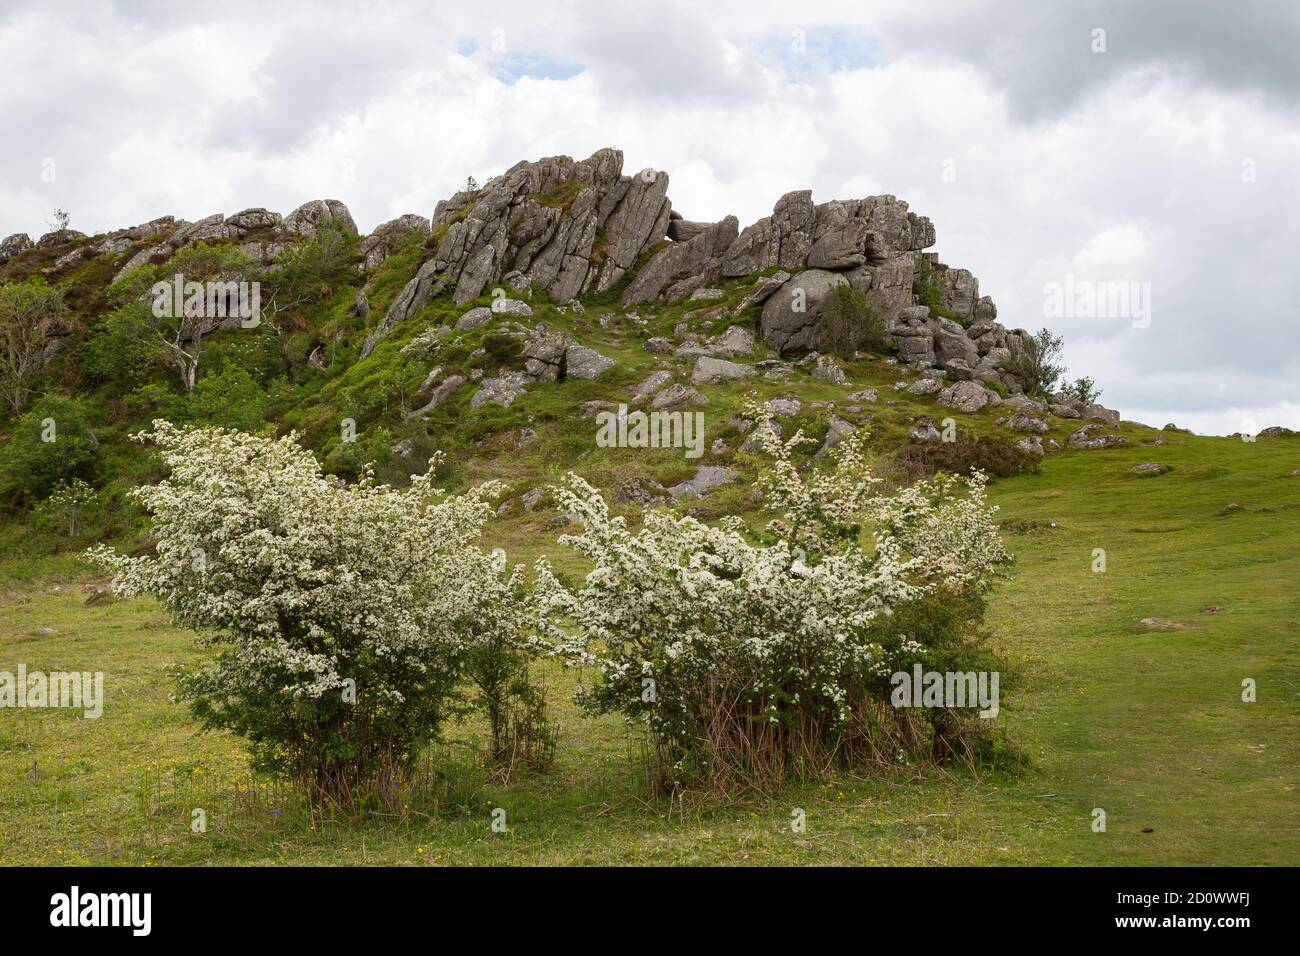 Flowering Hawthorn bushes in front of Greator Rocks, Devon, UK Stock Photo